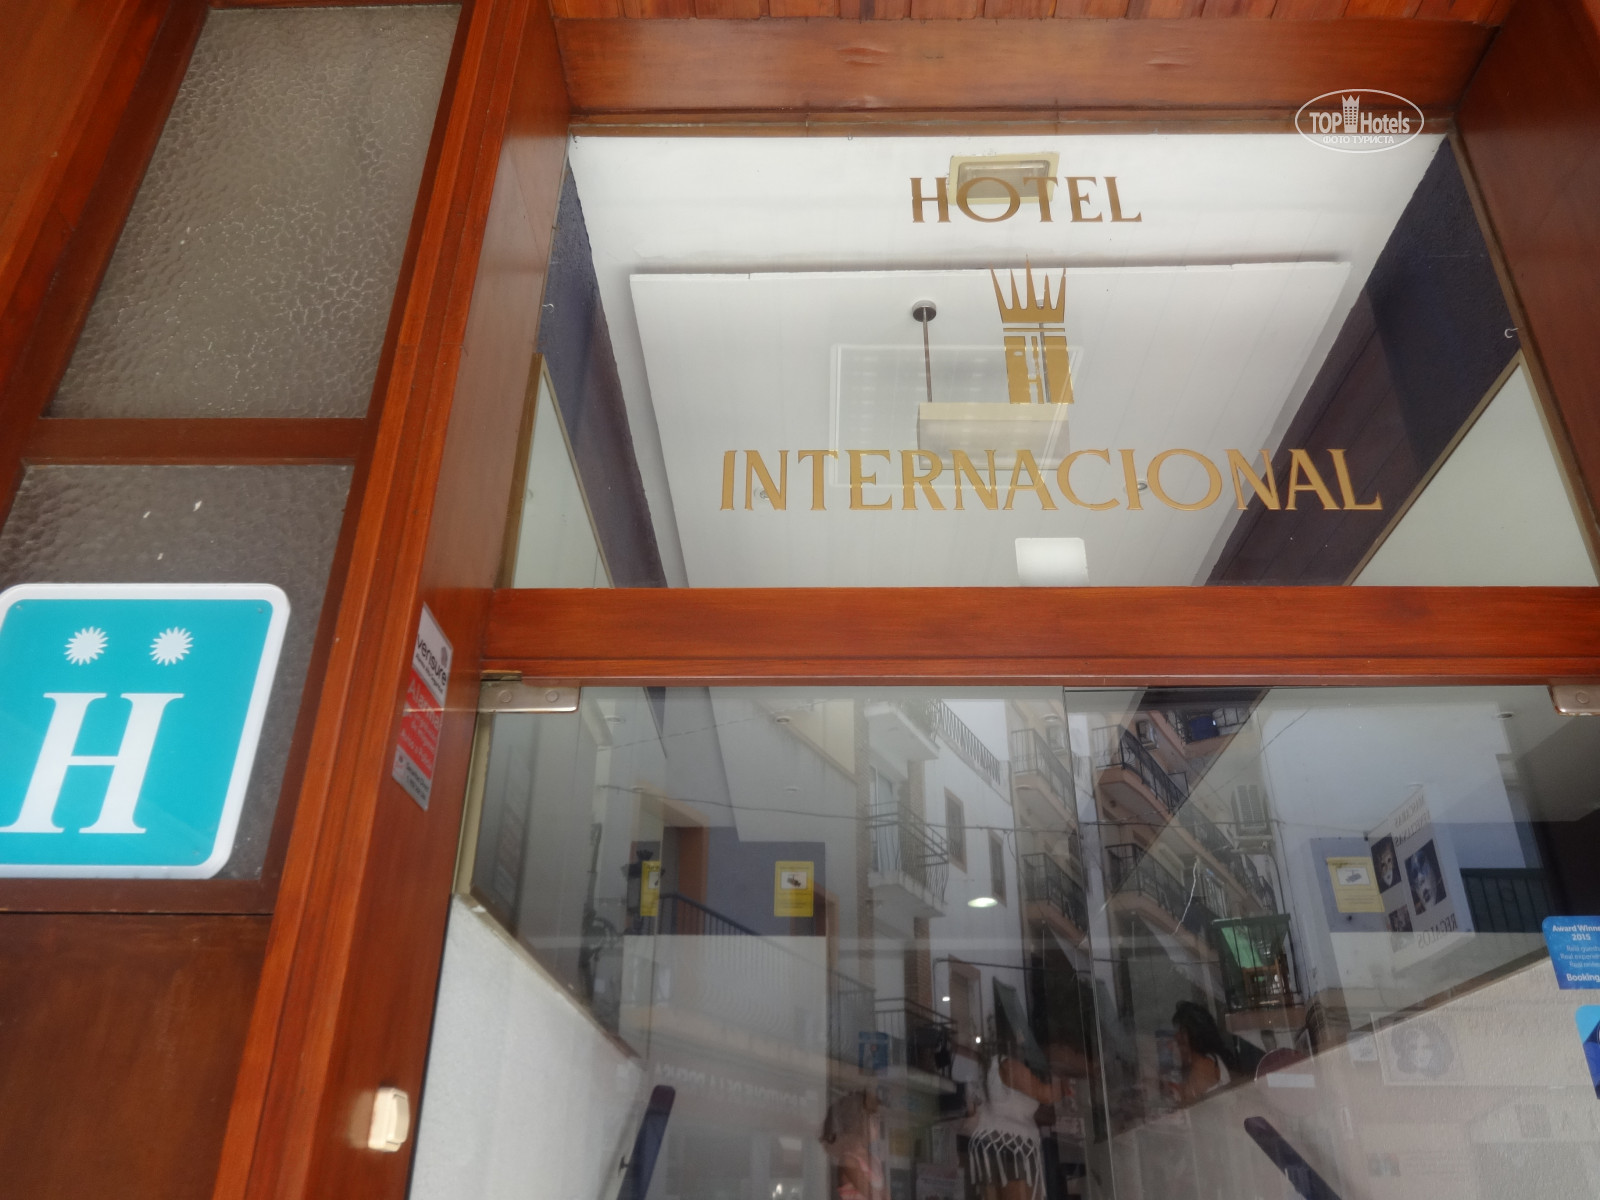 Tours to the hotel Internacional